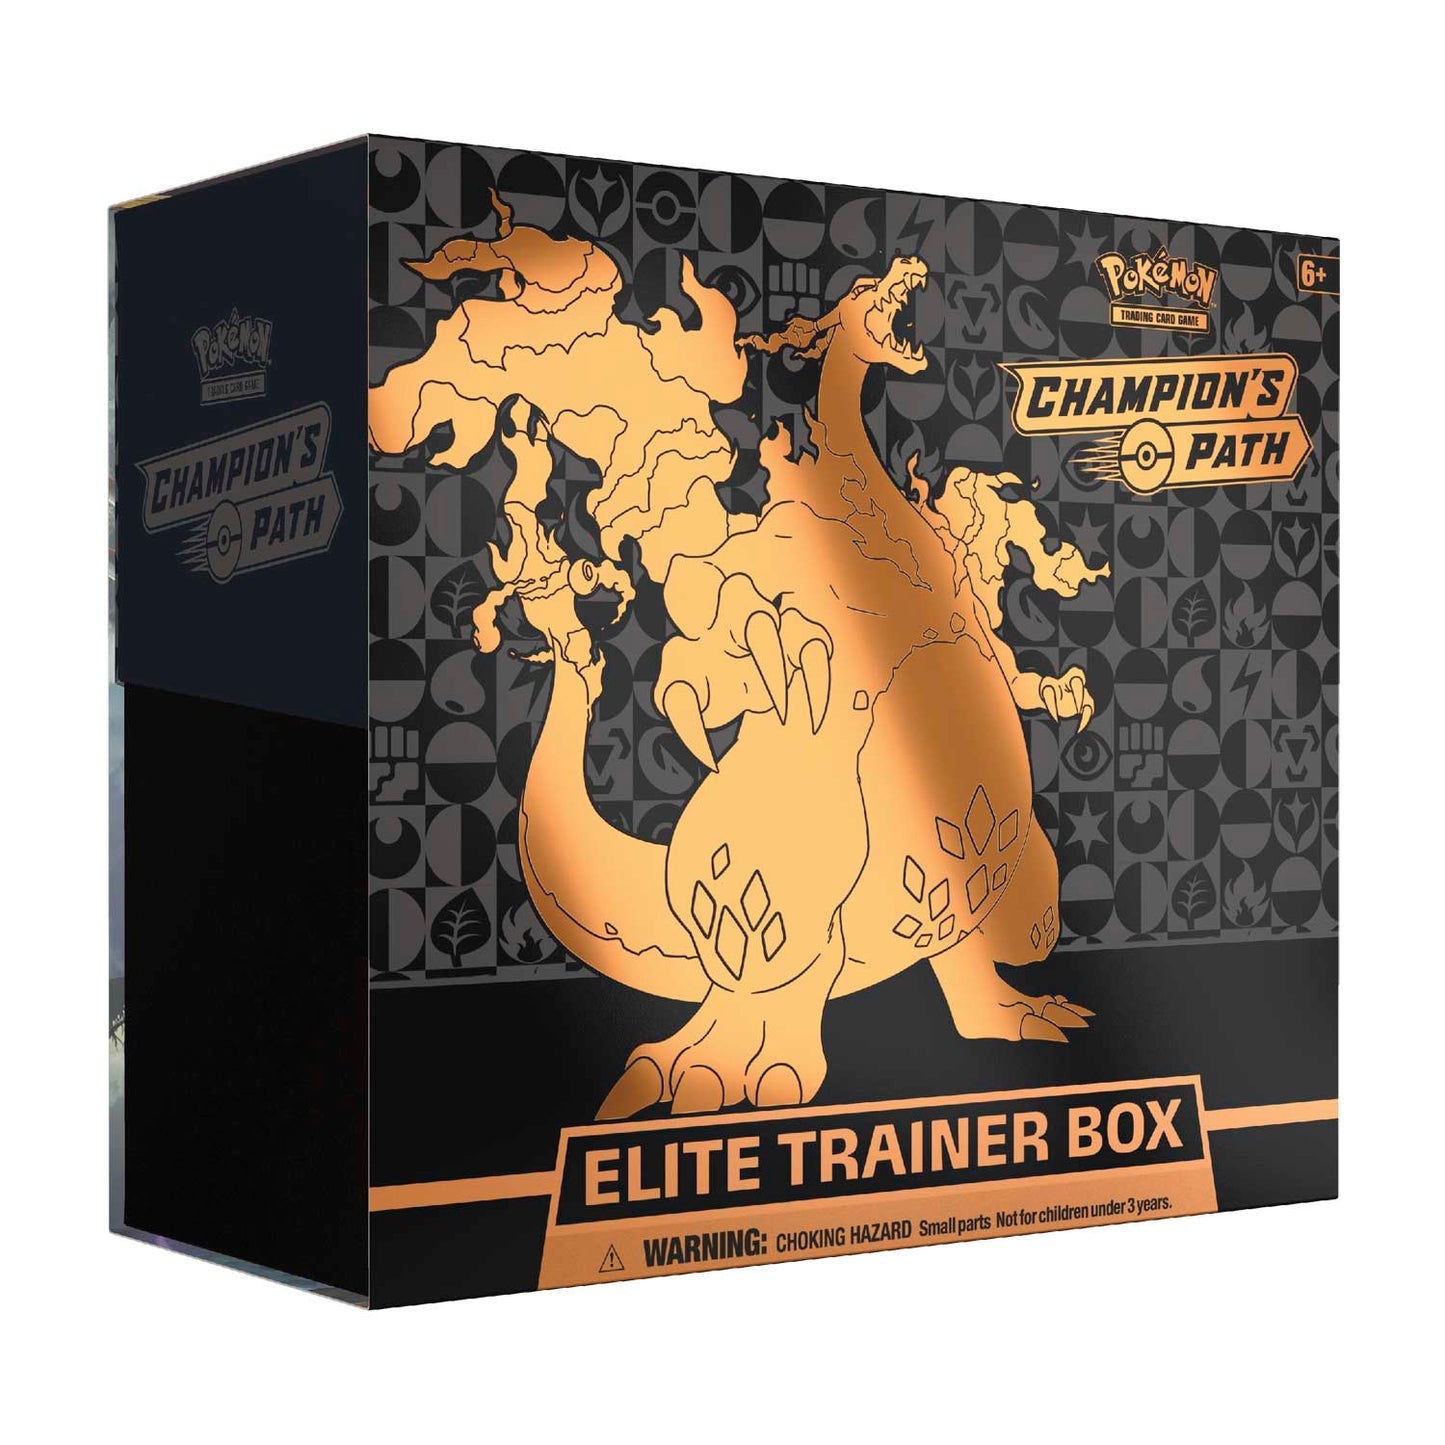 Pokémon Elite Trainer Box S&S Champions Path Official Factory Sealed